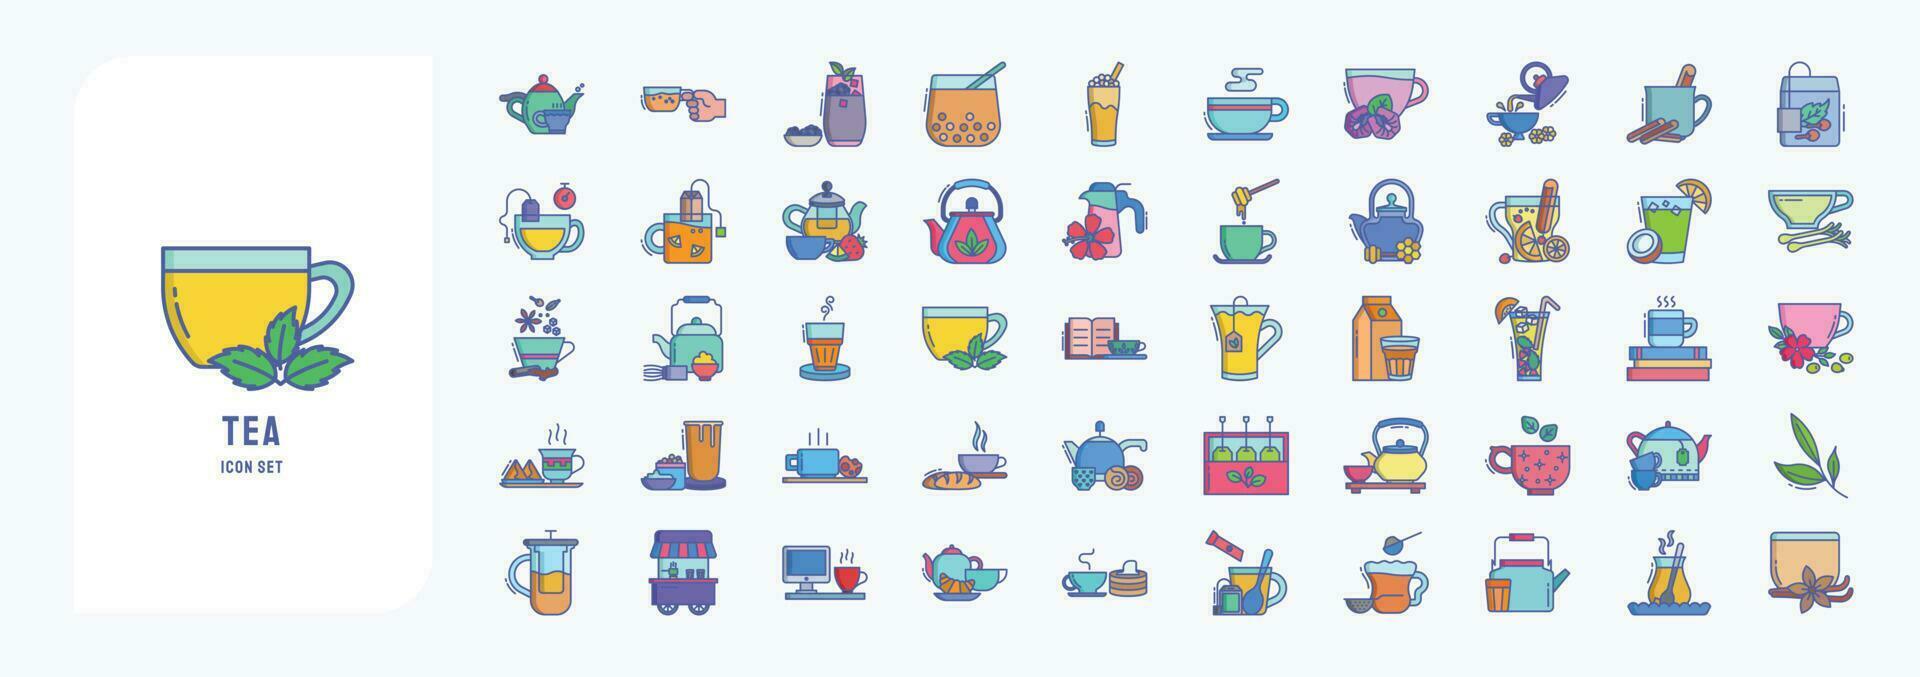 colección de íconos relacionado a té, incluso íconos me gusta negro té, leche, burbuja té, verde té y más vector